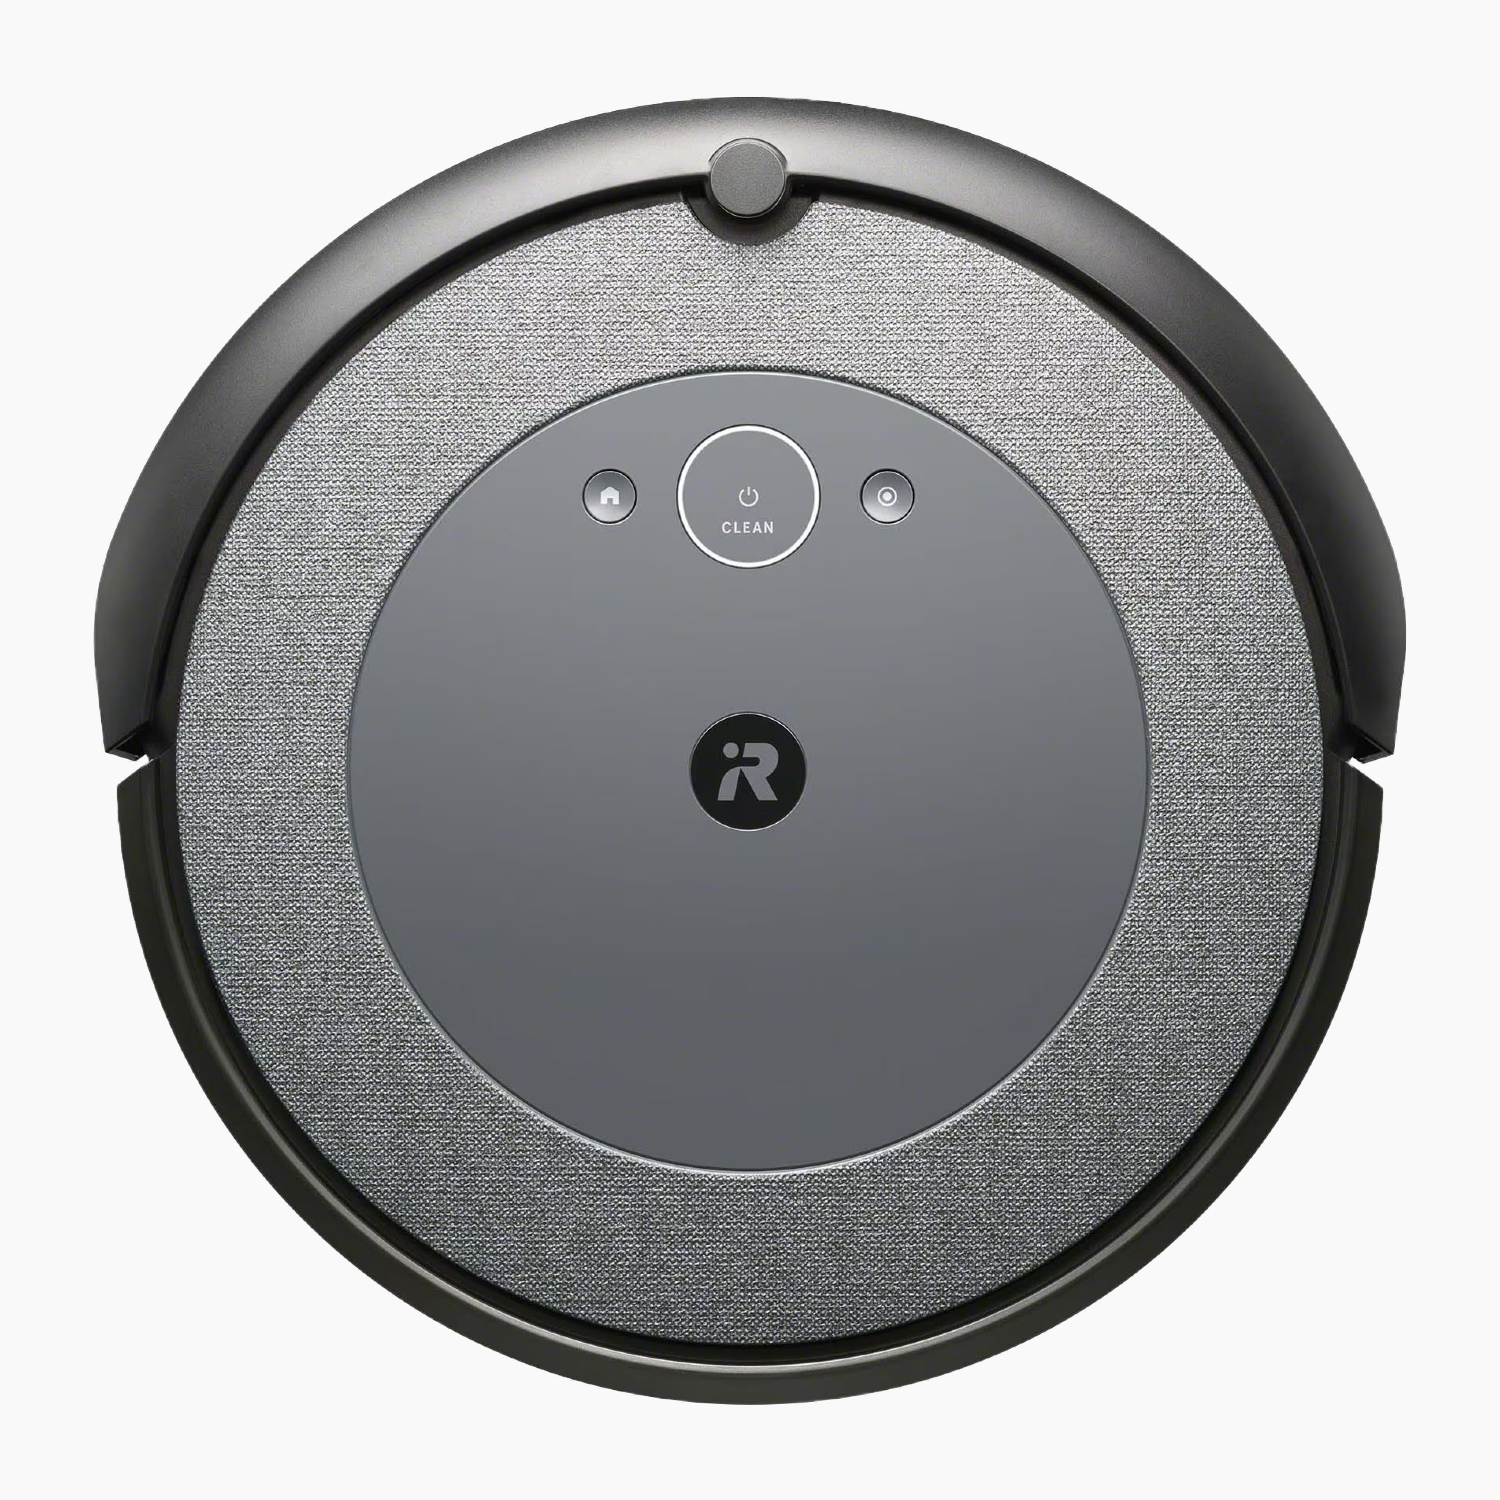 HGG22 Main iRobot Roomba i3 EVO The Verge’s 2022 home tech holiday gift guide